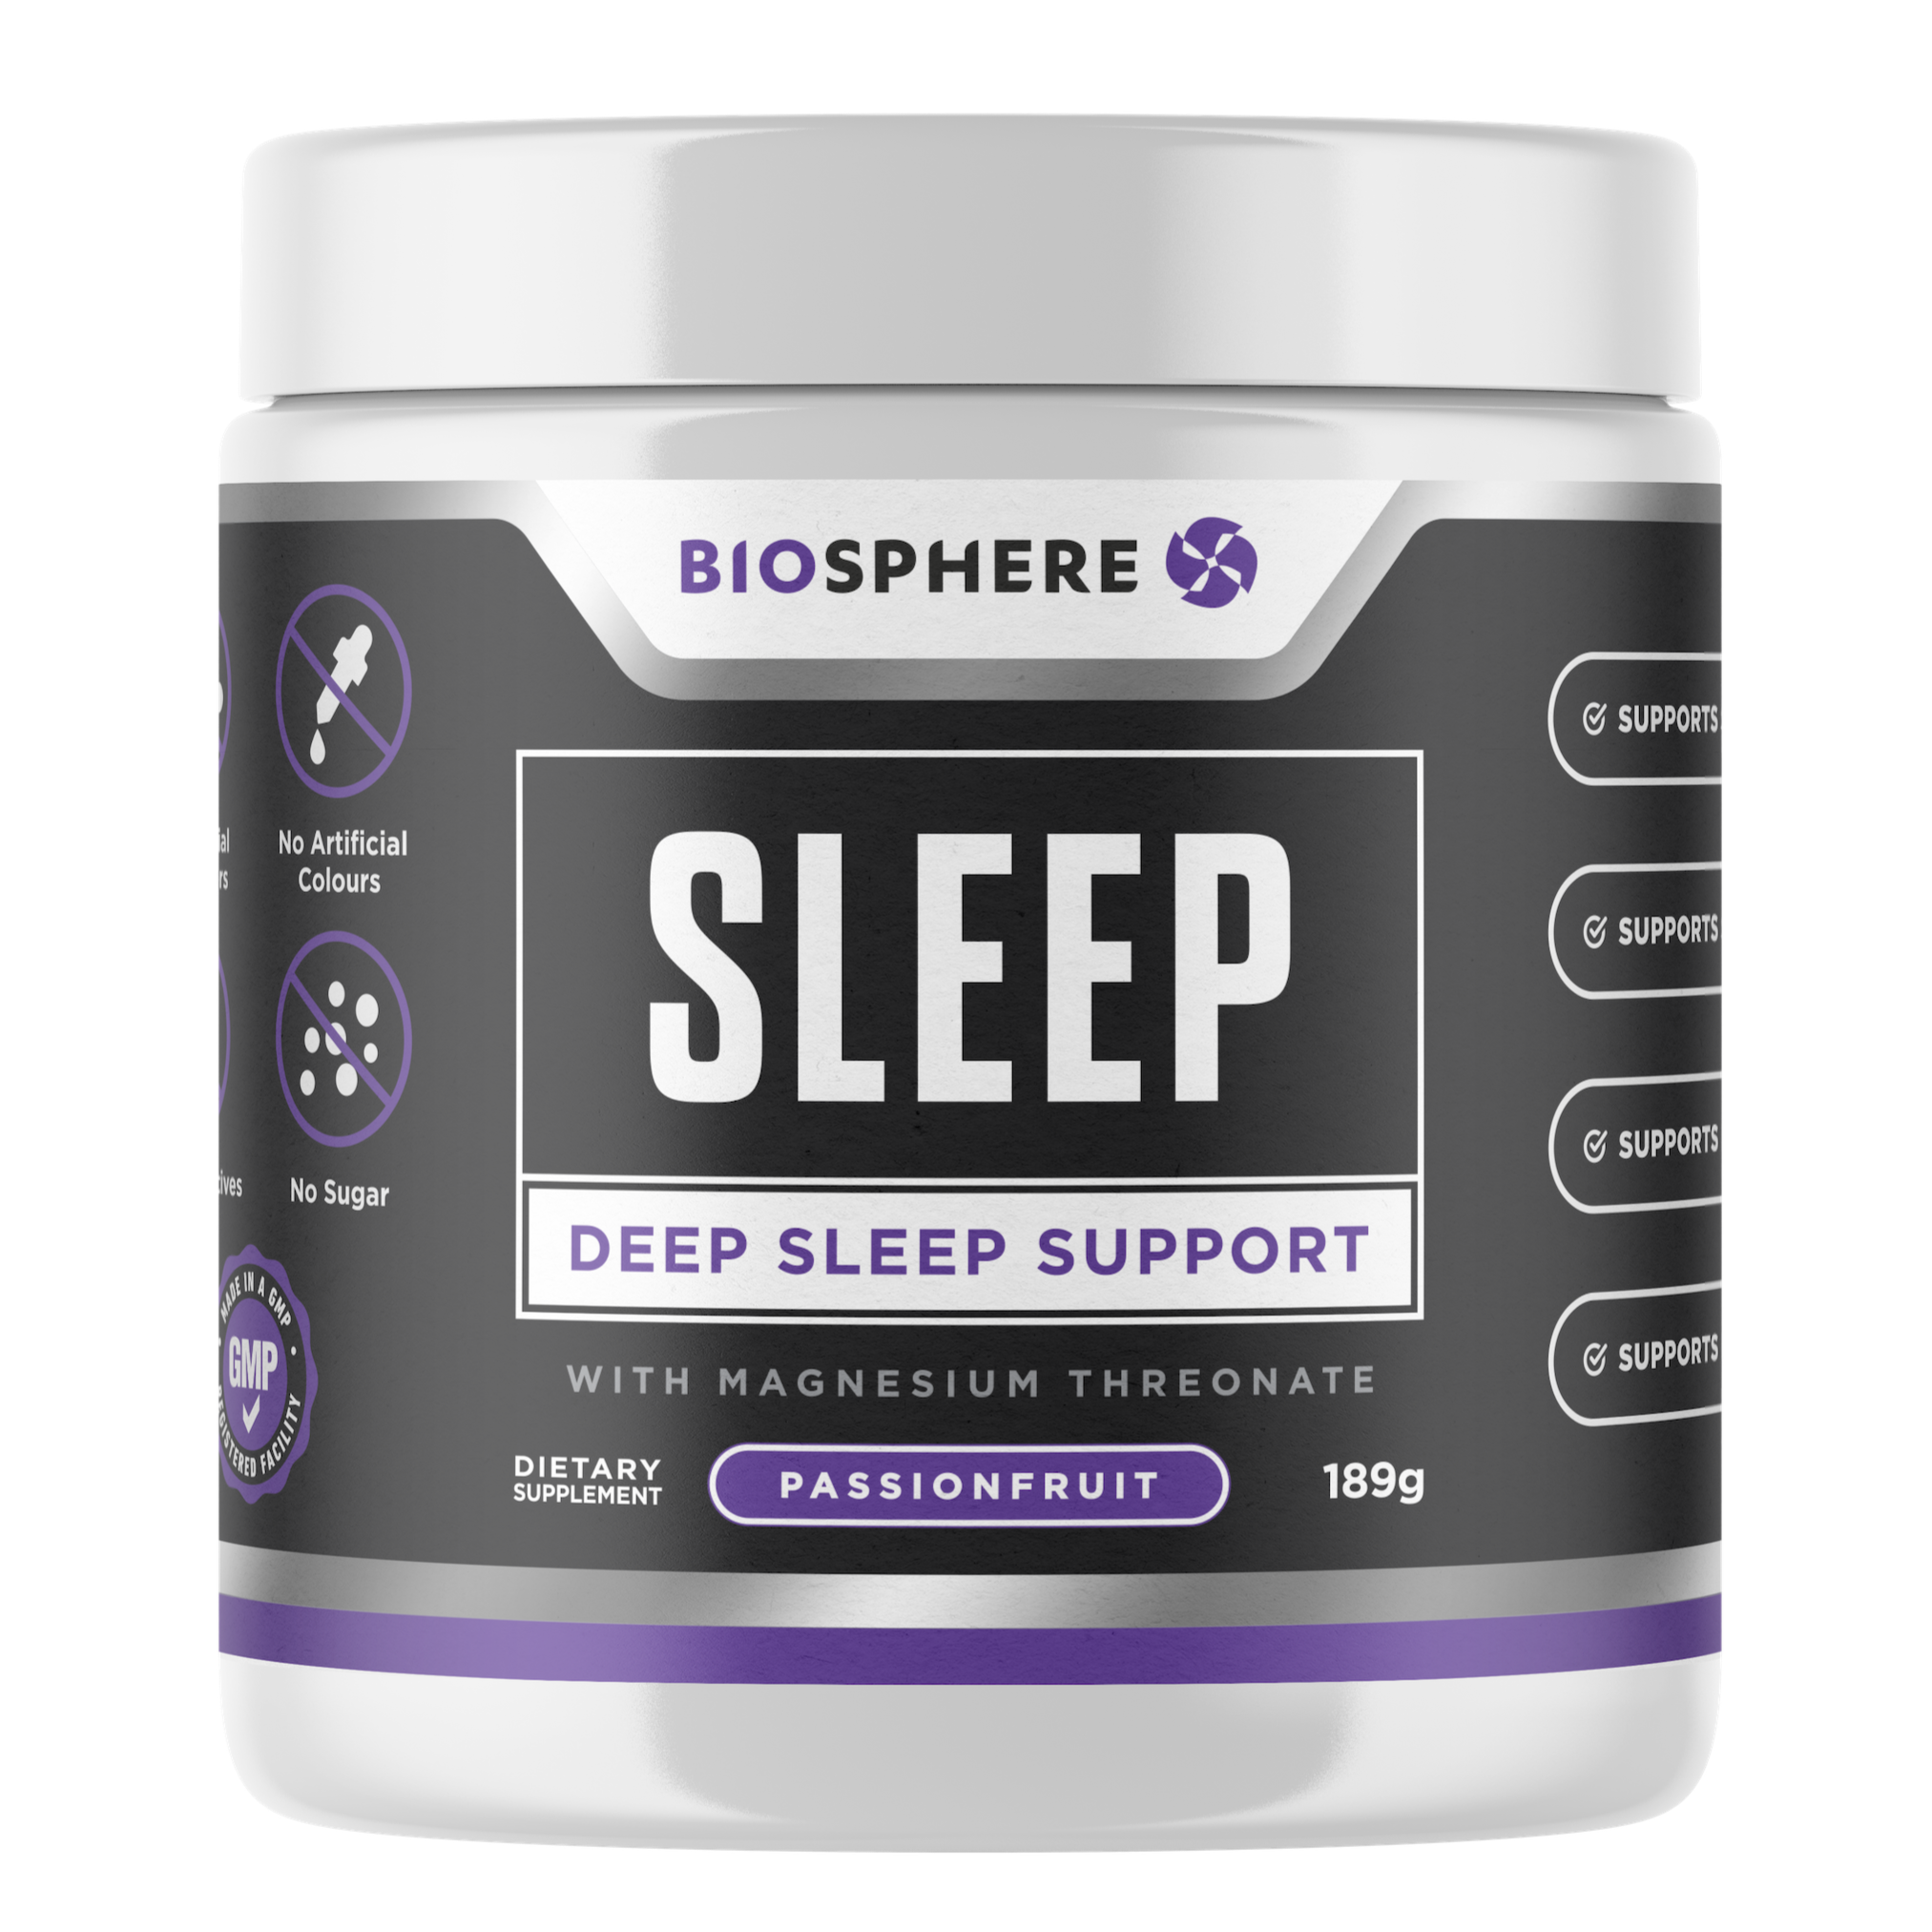 Biosphere Sleep Deep Sleep Support With Magnesium Threonate Passionfruit 189g